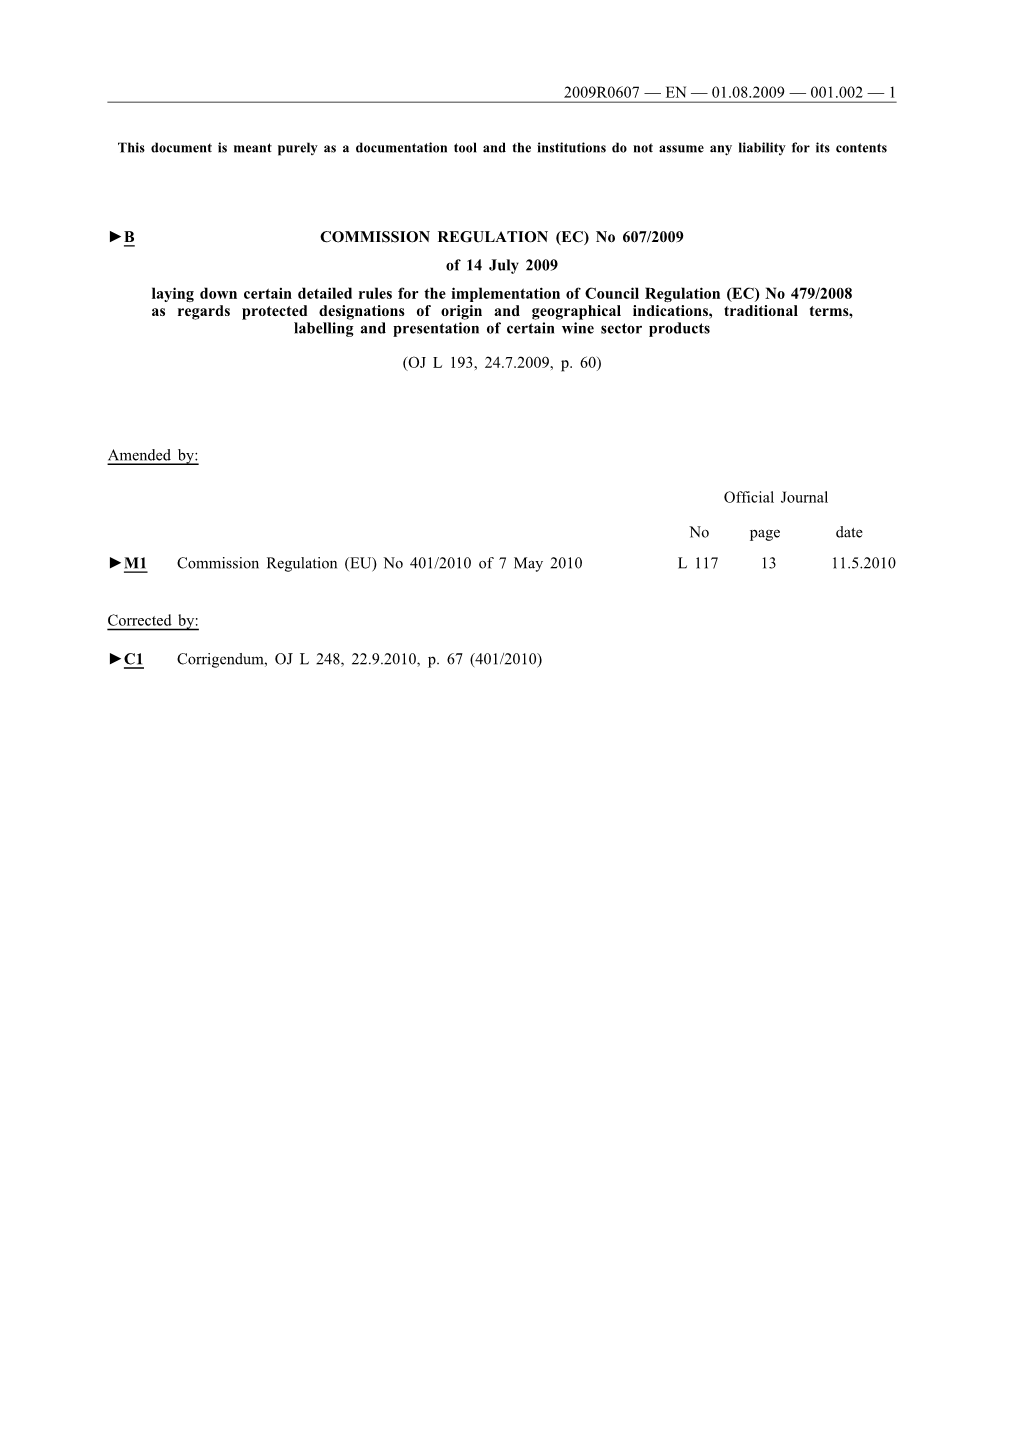 B COMMISSION REGULATION (EC) No 607/2009 of 14 July